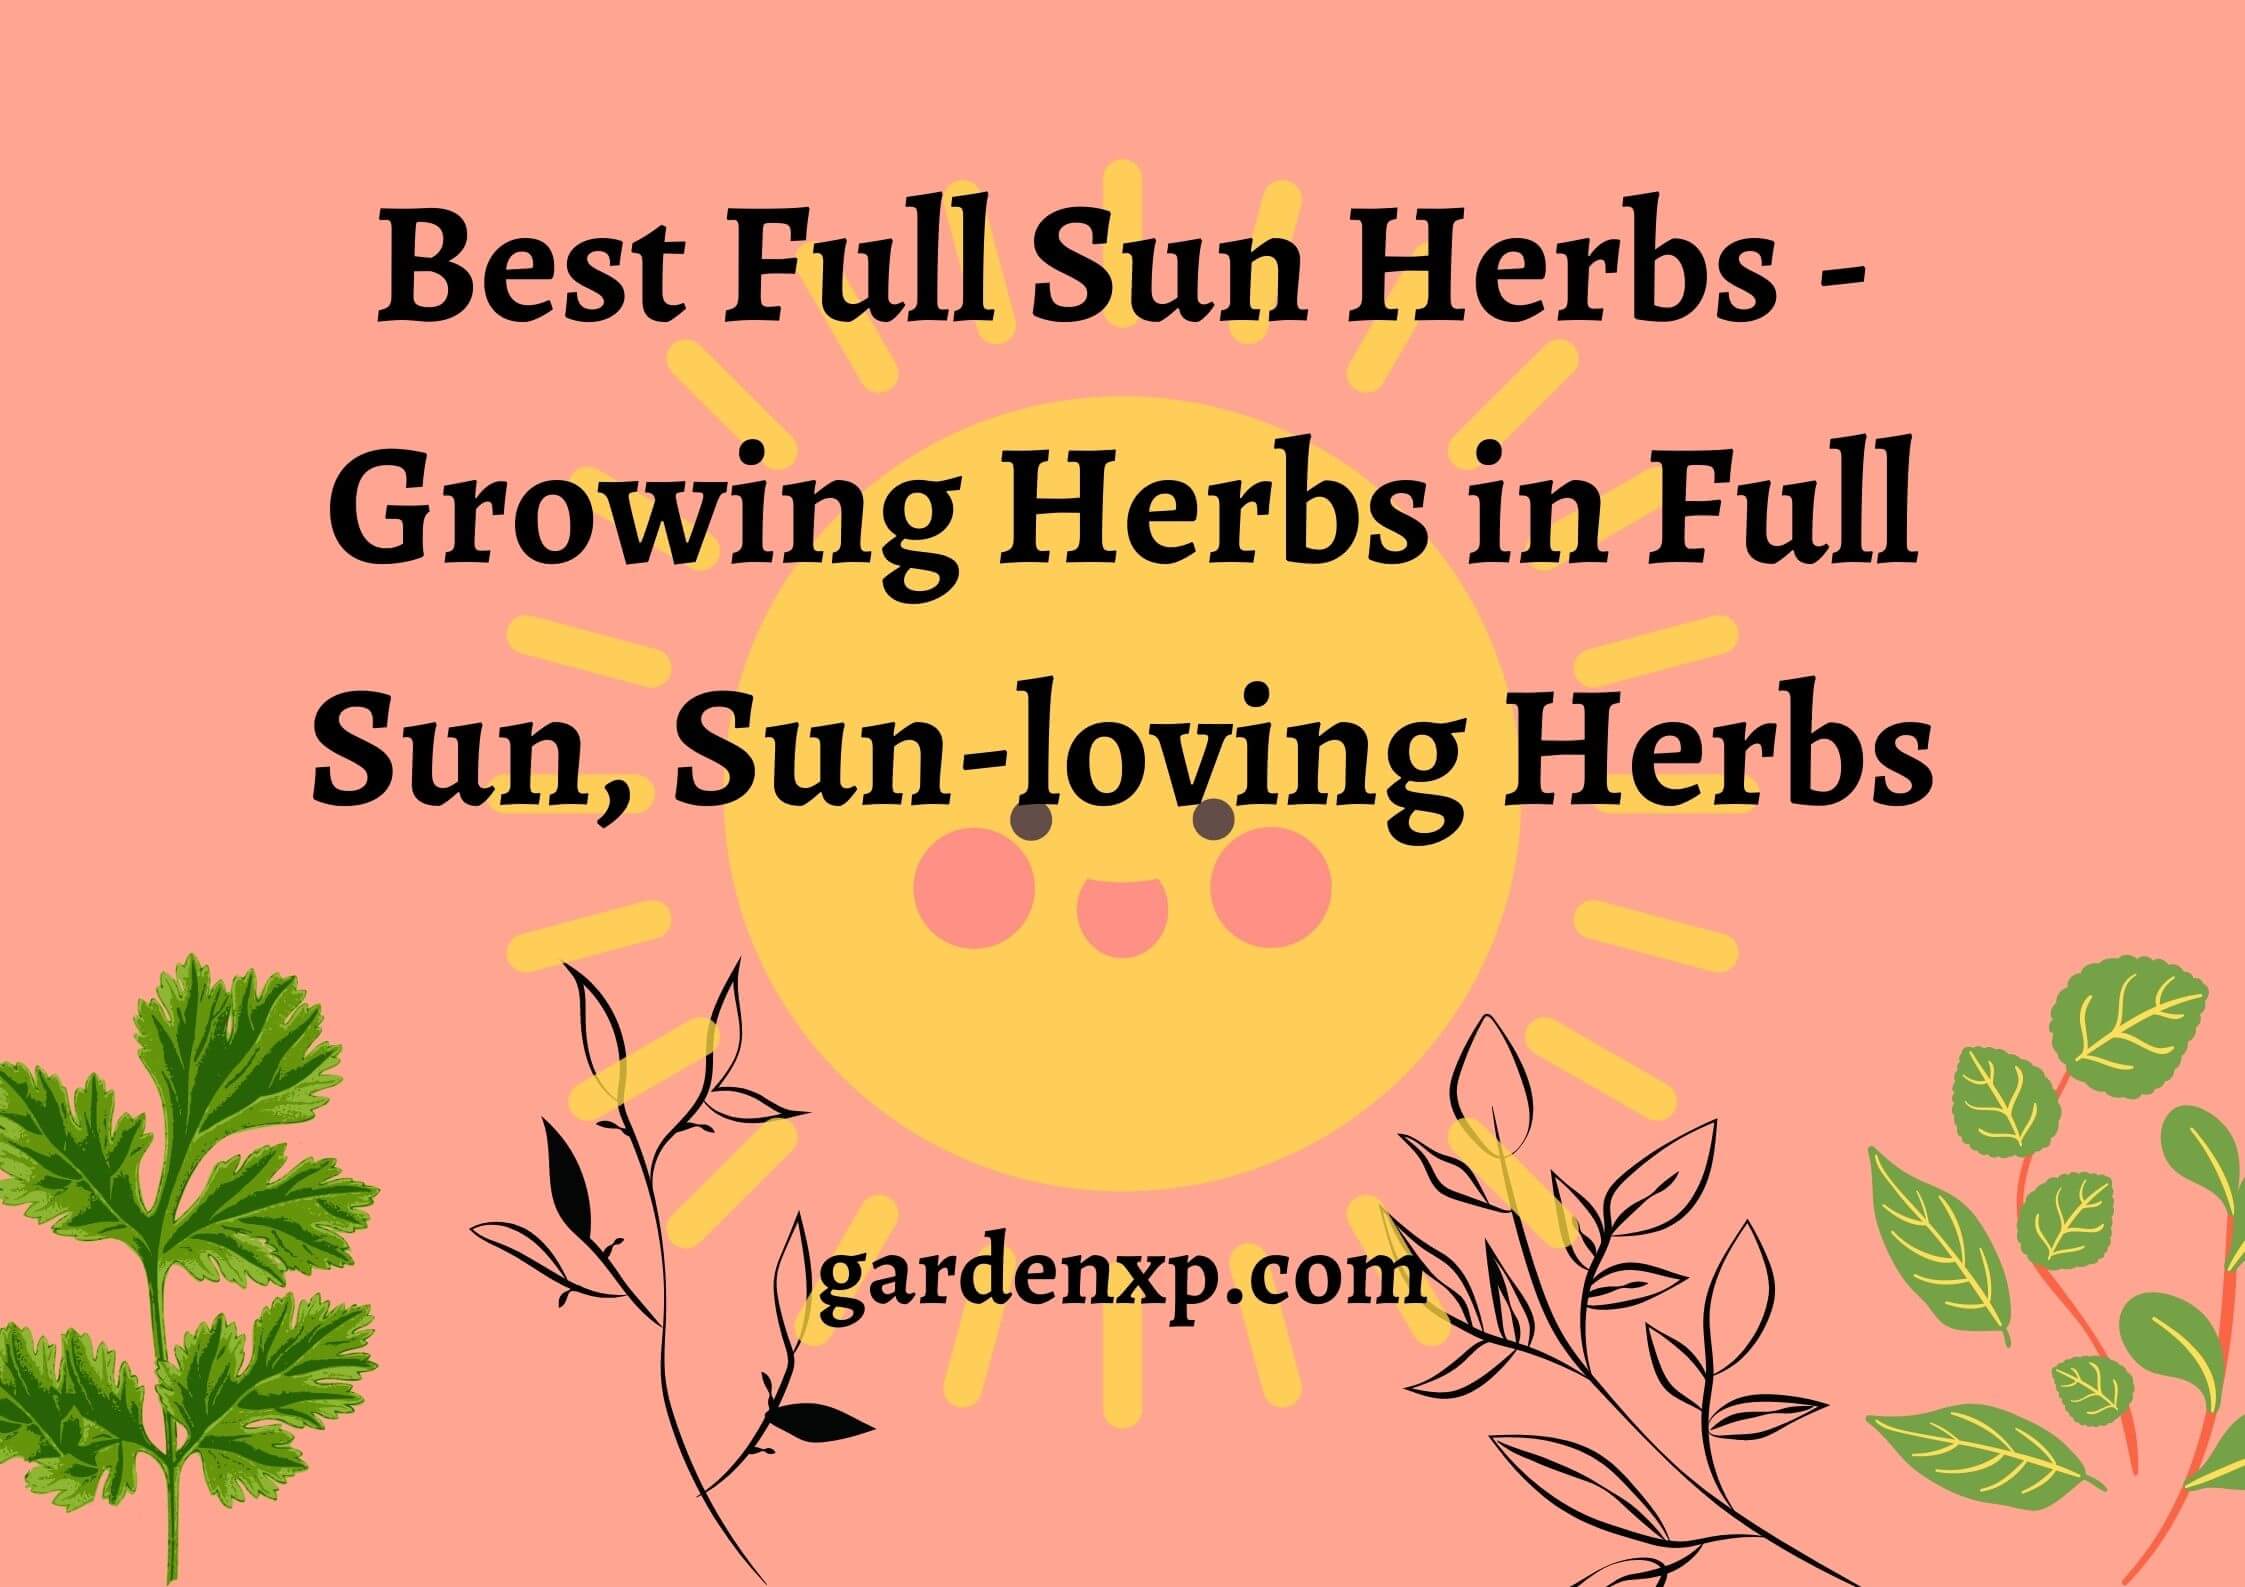 Best Full Sun Herbs - Growing Herbs in Full Sun, Sun-loving Herbs